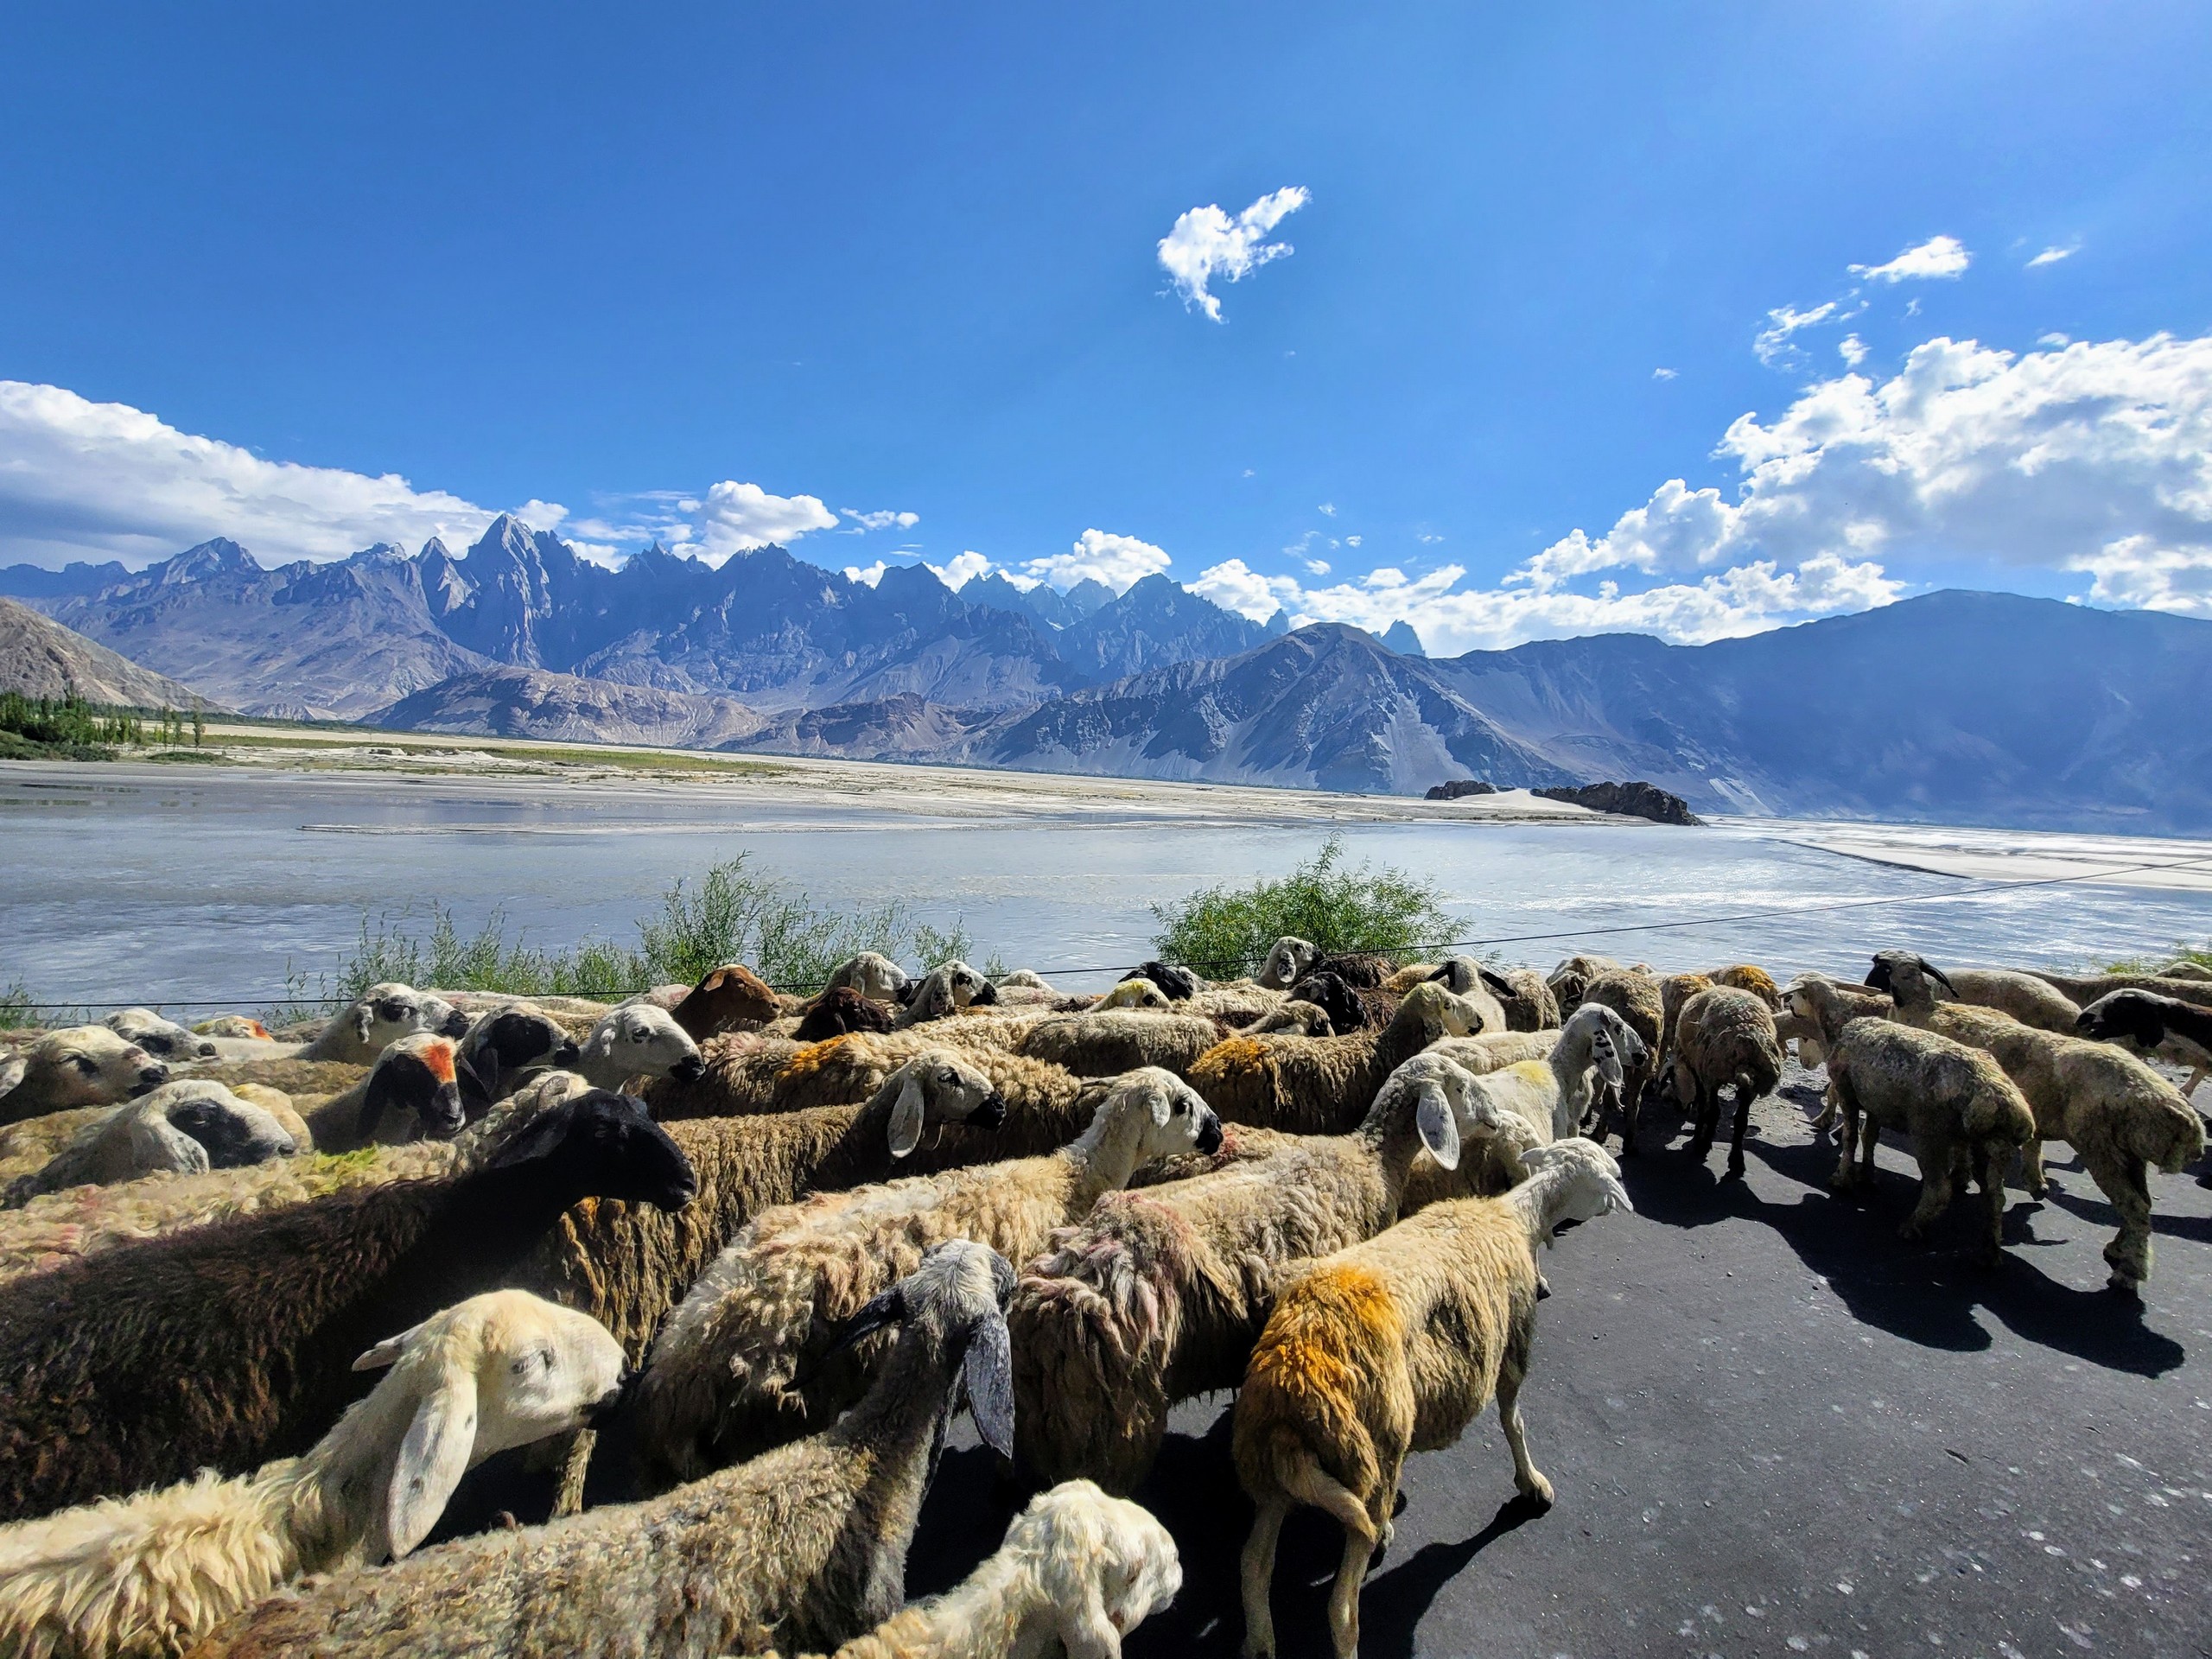 Herd of sheep and mountain views seen at Khaplu Road